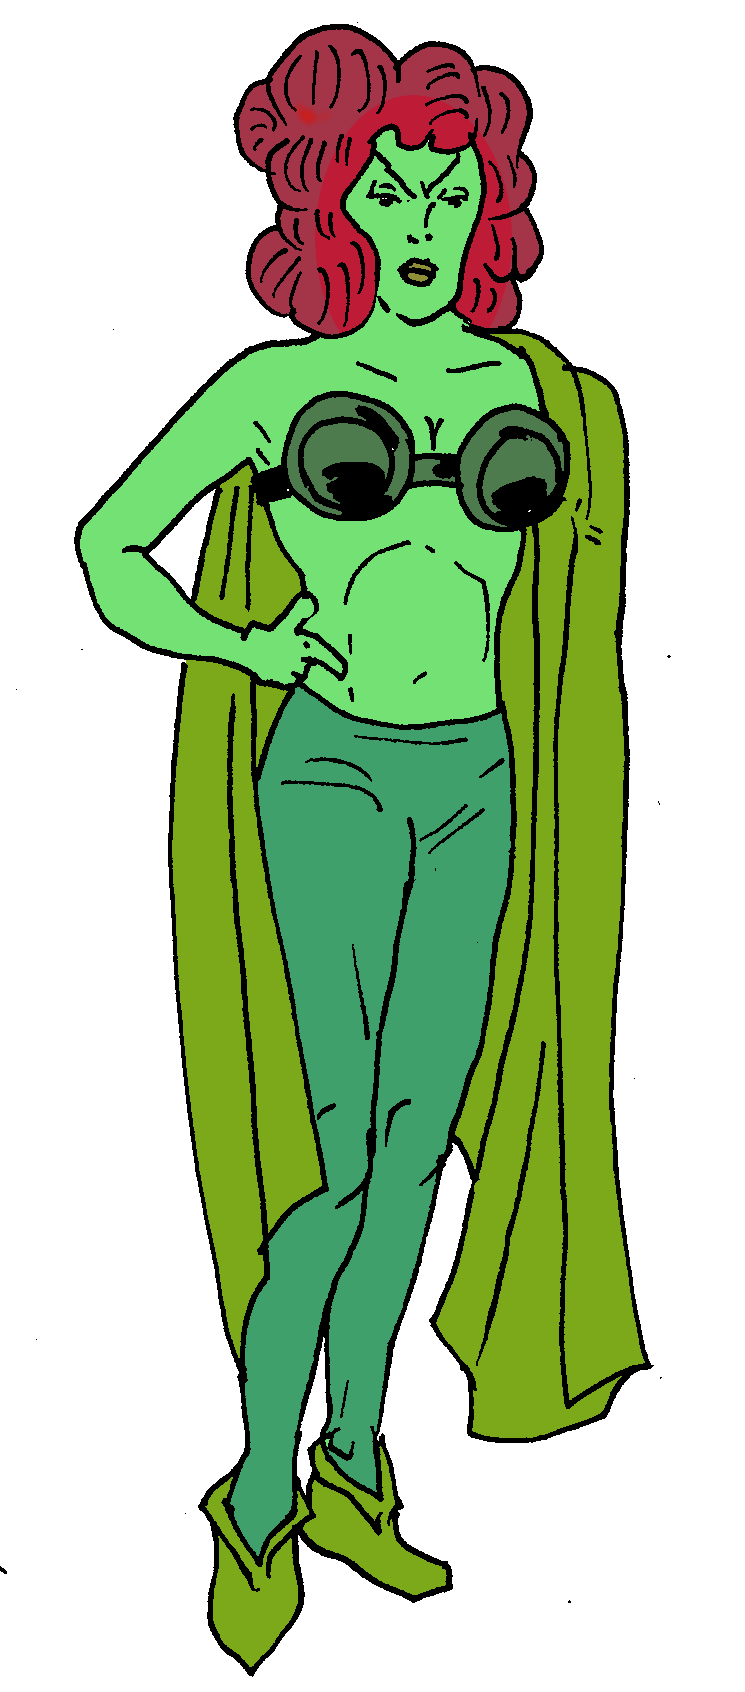 The Green Sorceress